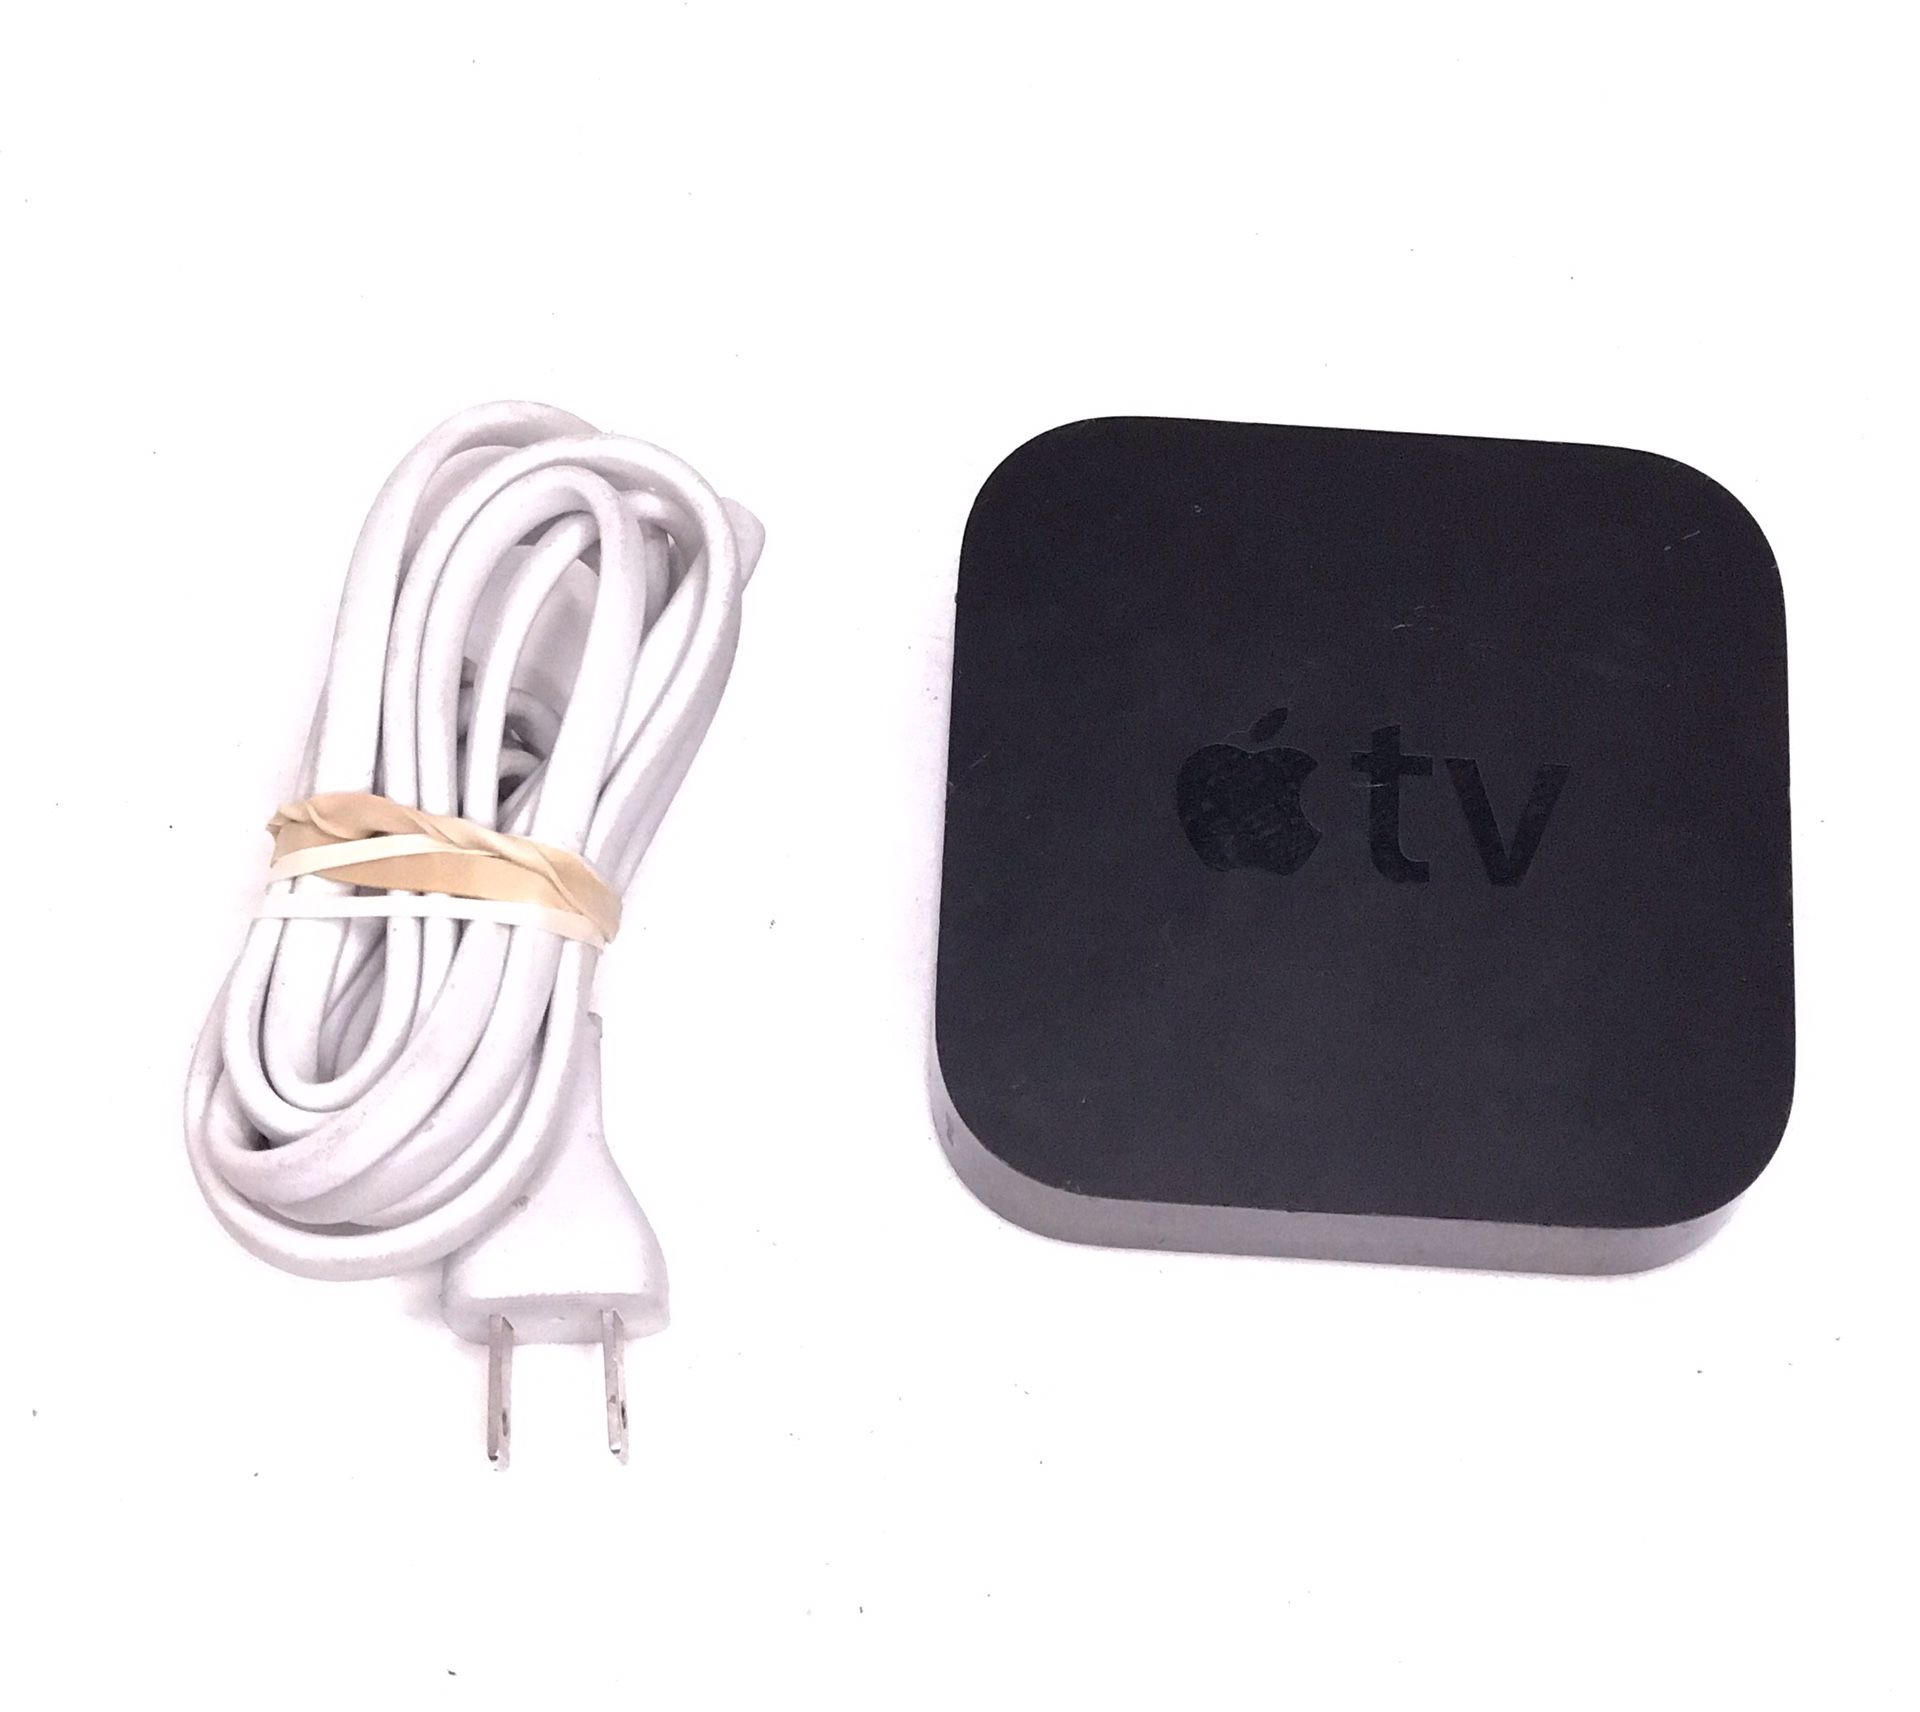 Apple TV 3rd Generation (no remote)